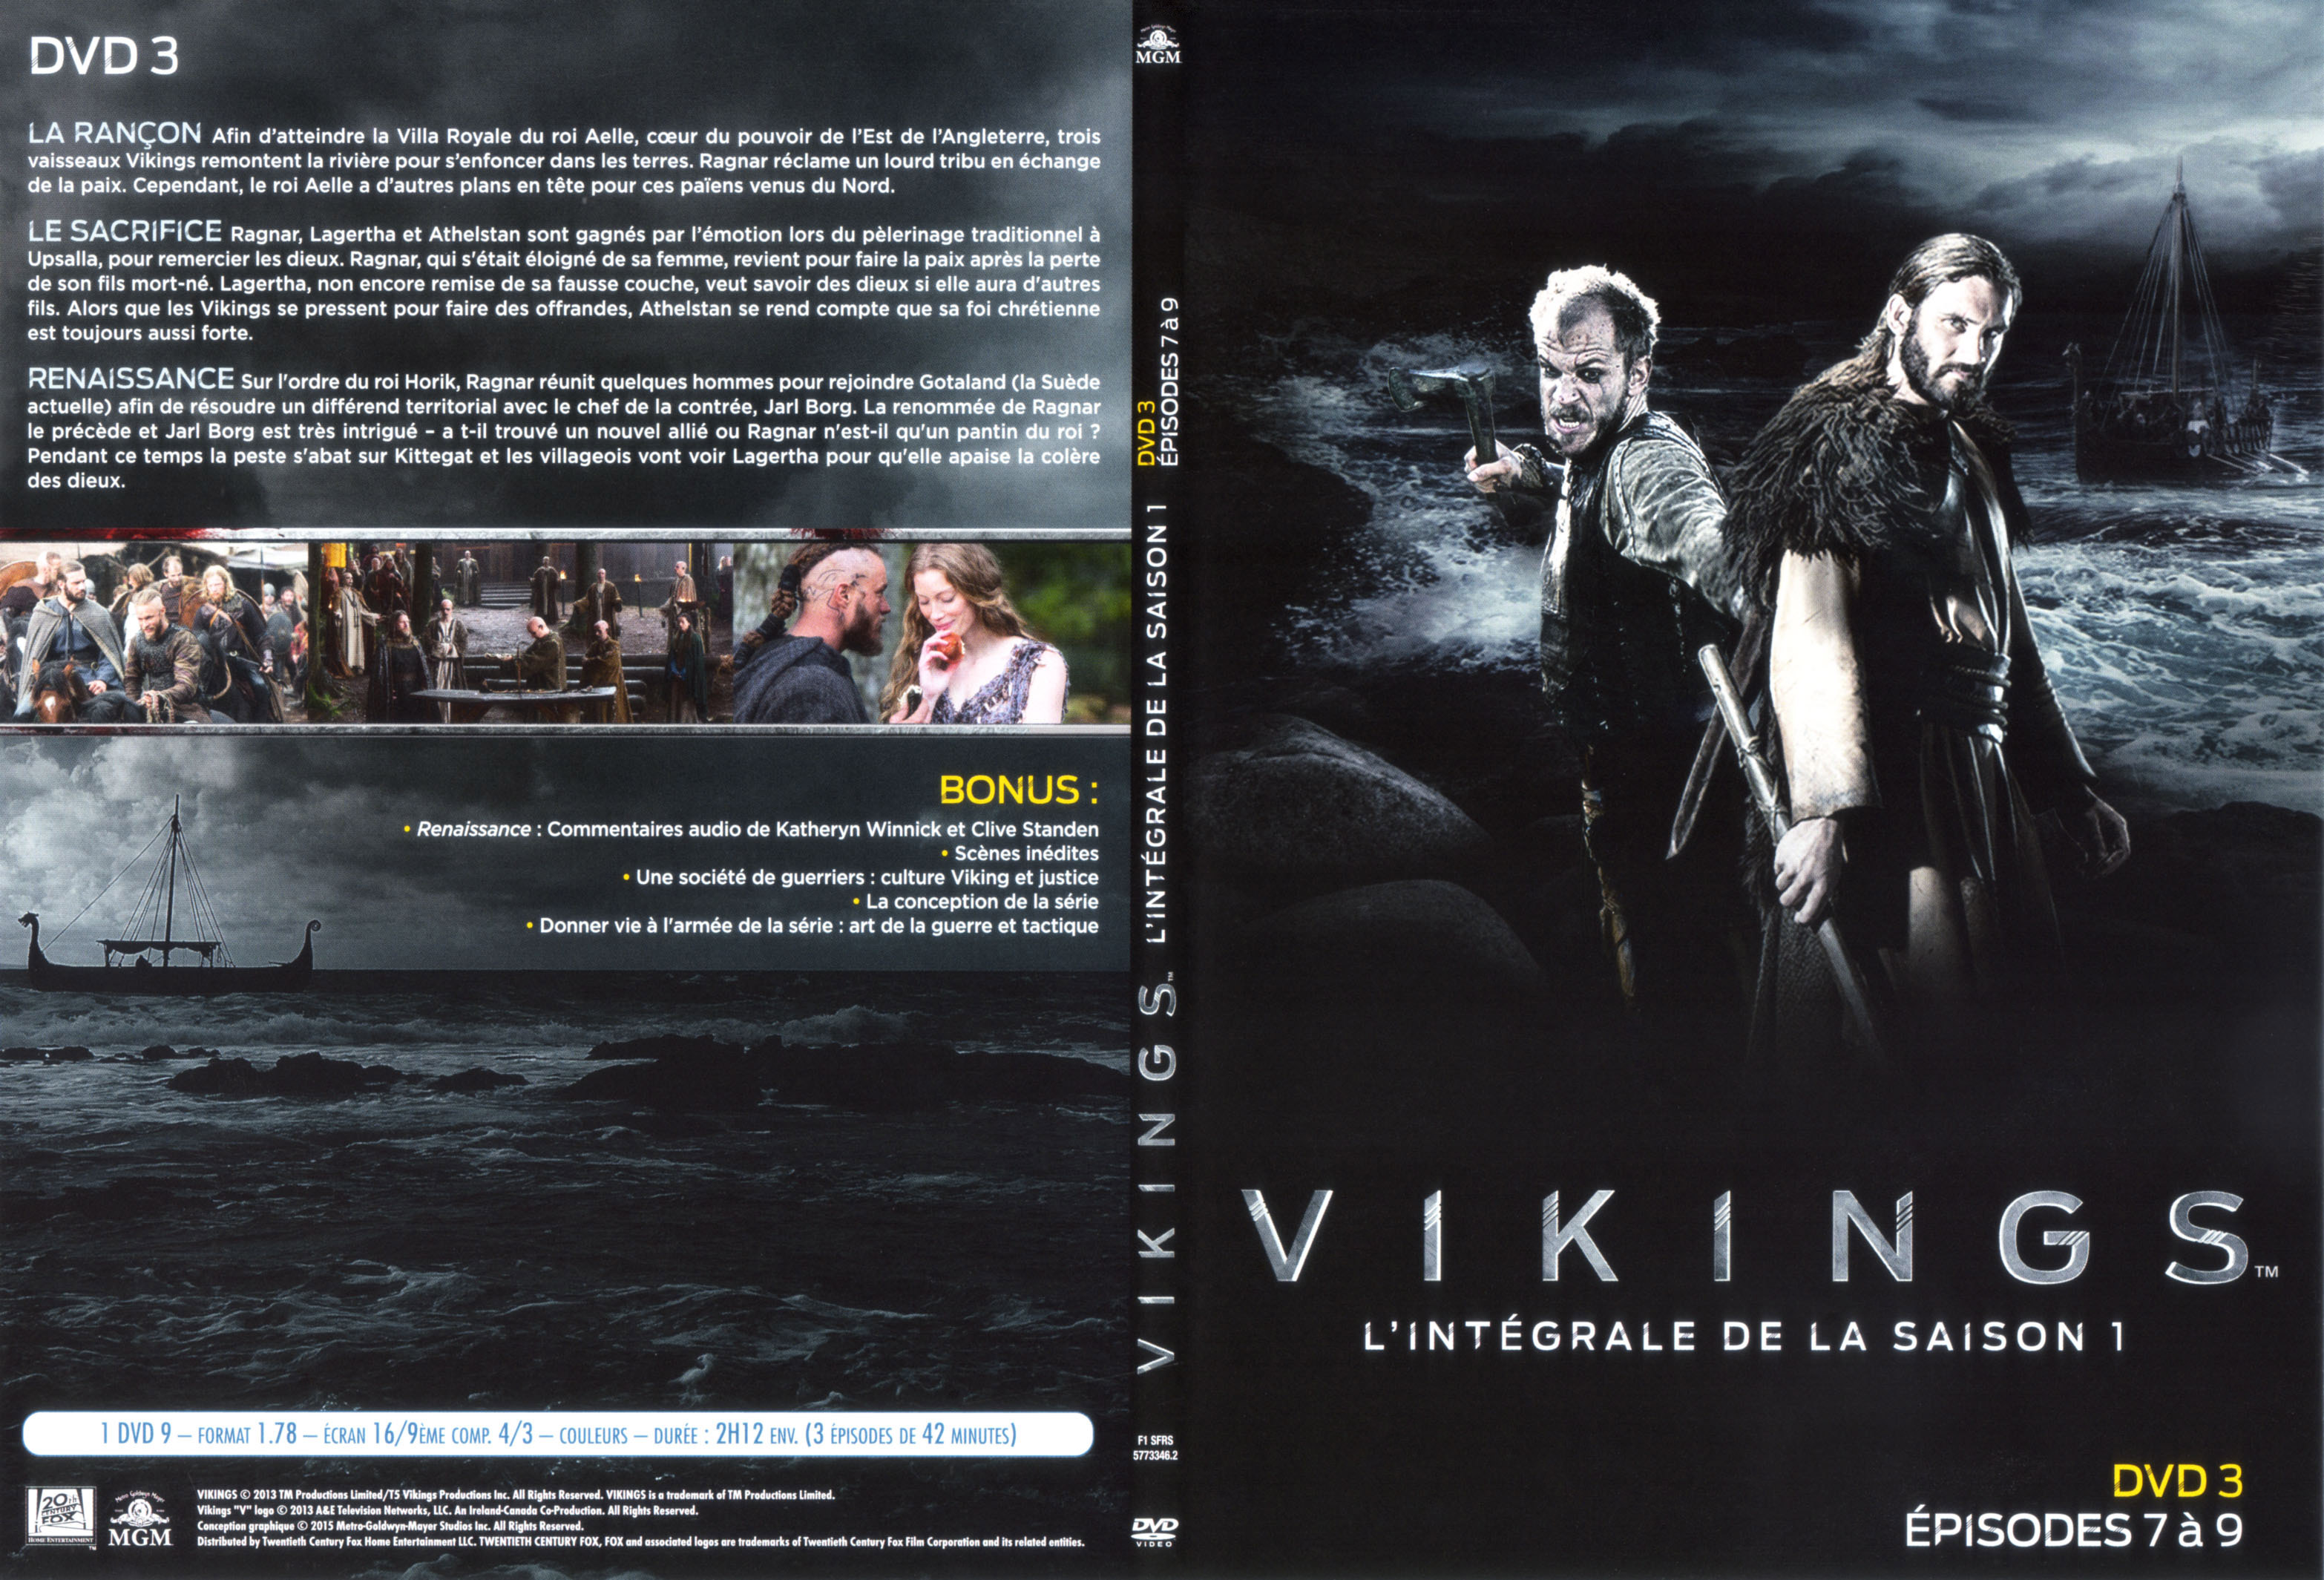 Jaquette DVD Vikings Saison 1 DVD 2